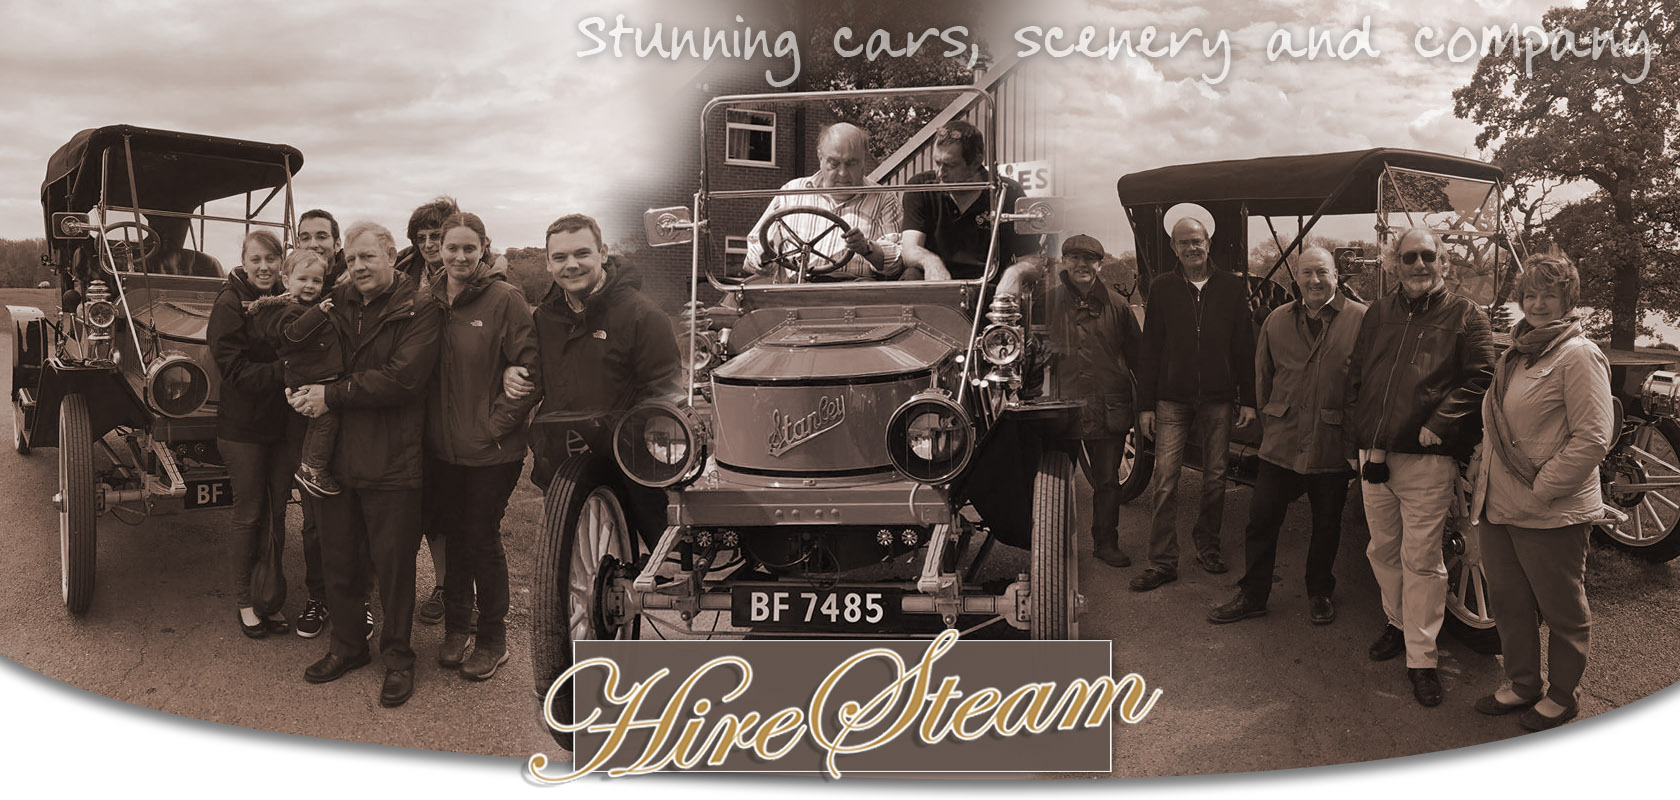 Steam Car Driving Experience